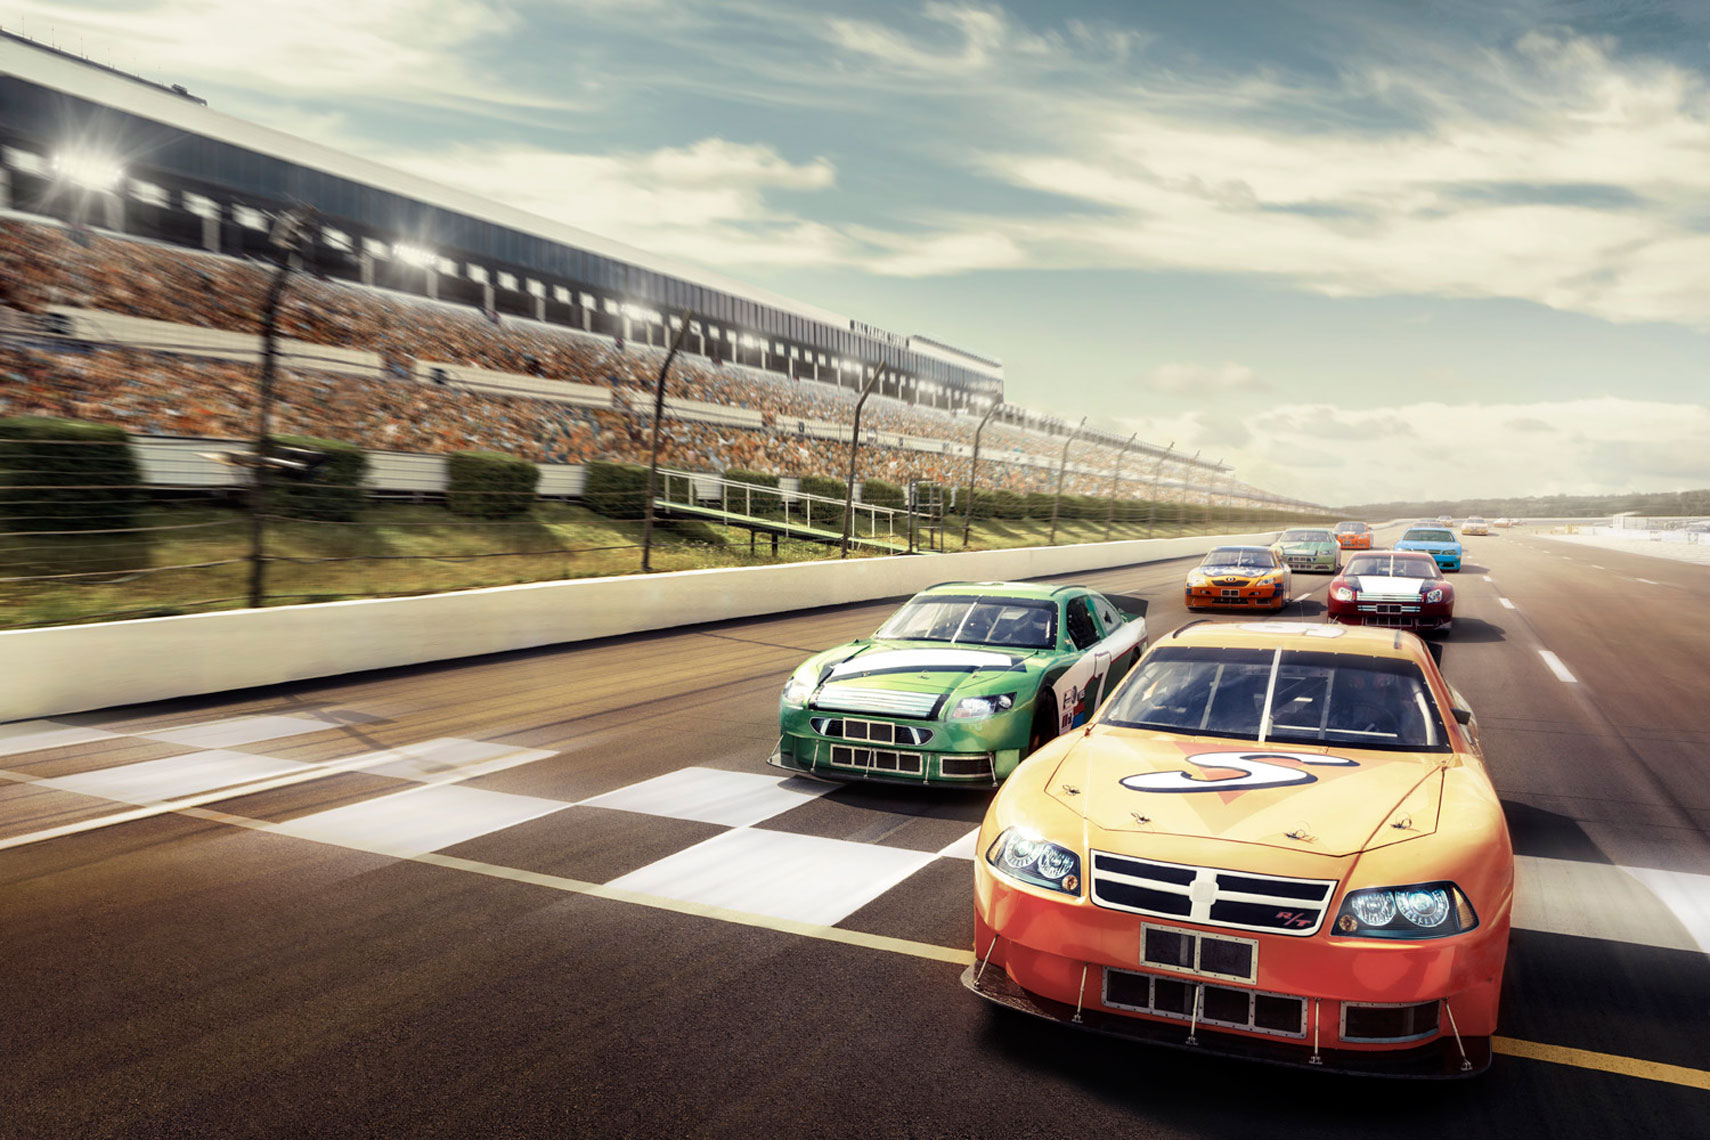 NASCAR Racing Scene Composite: CORBIS: FINAL IMAGE